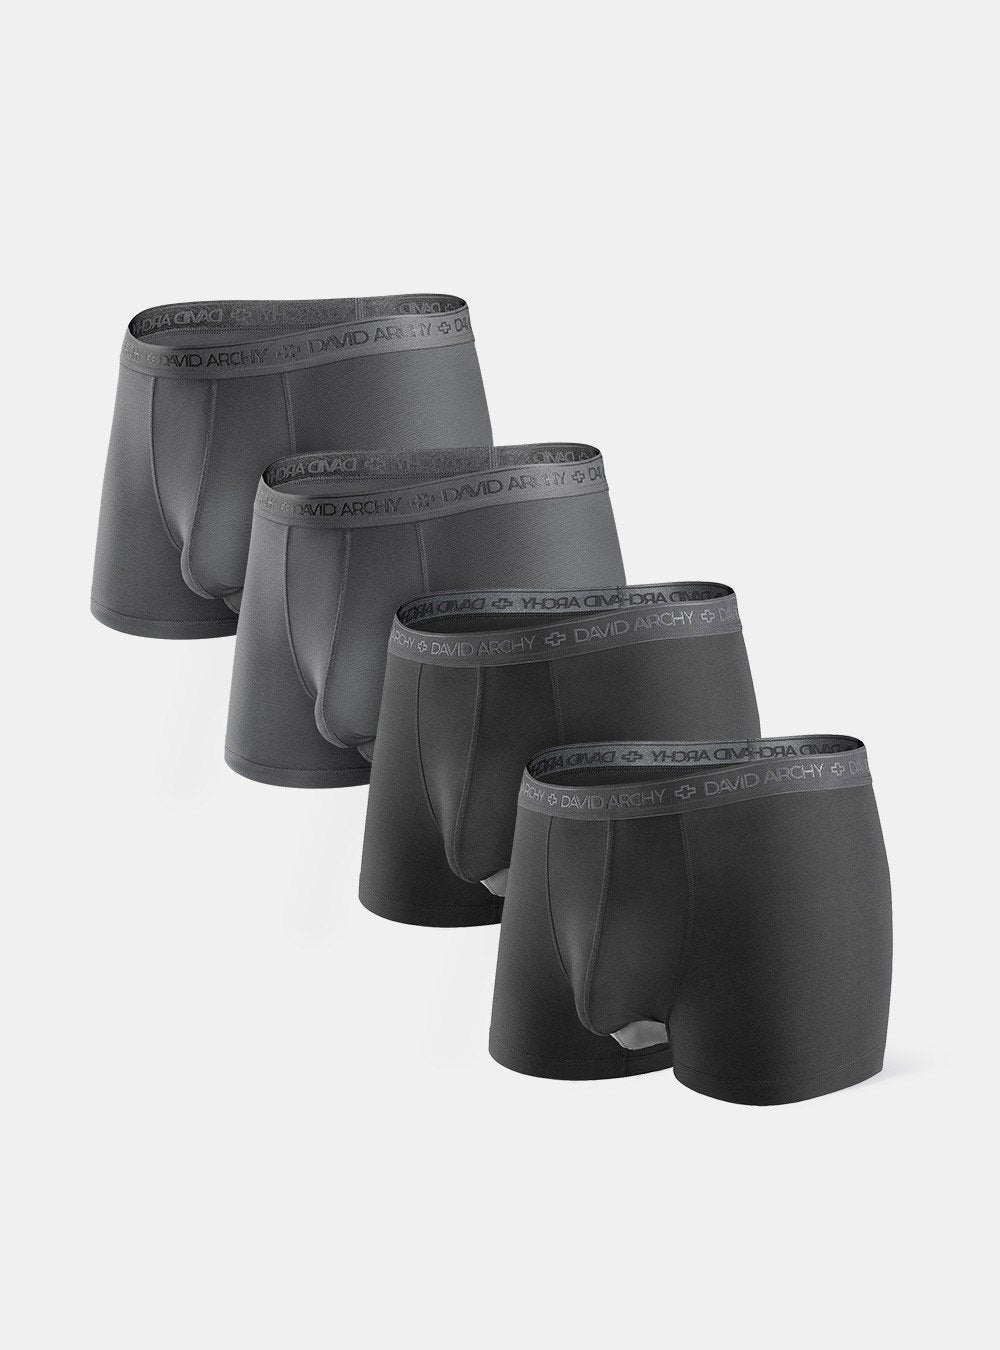 Buy Separatec Men's Underwear Dual Pouch Ultra Soft Micro Modal